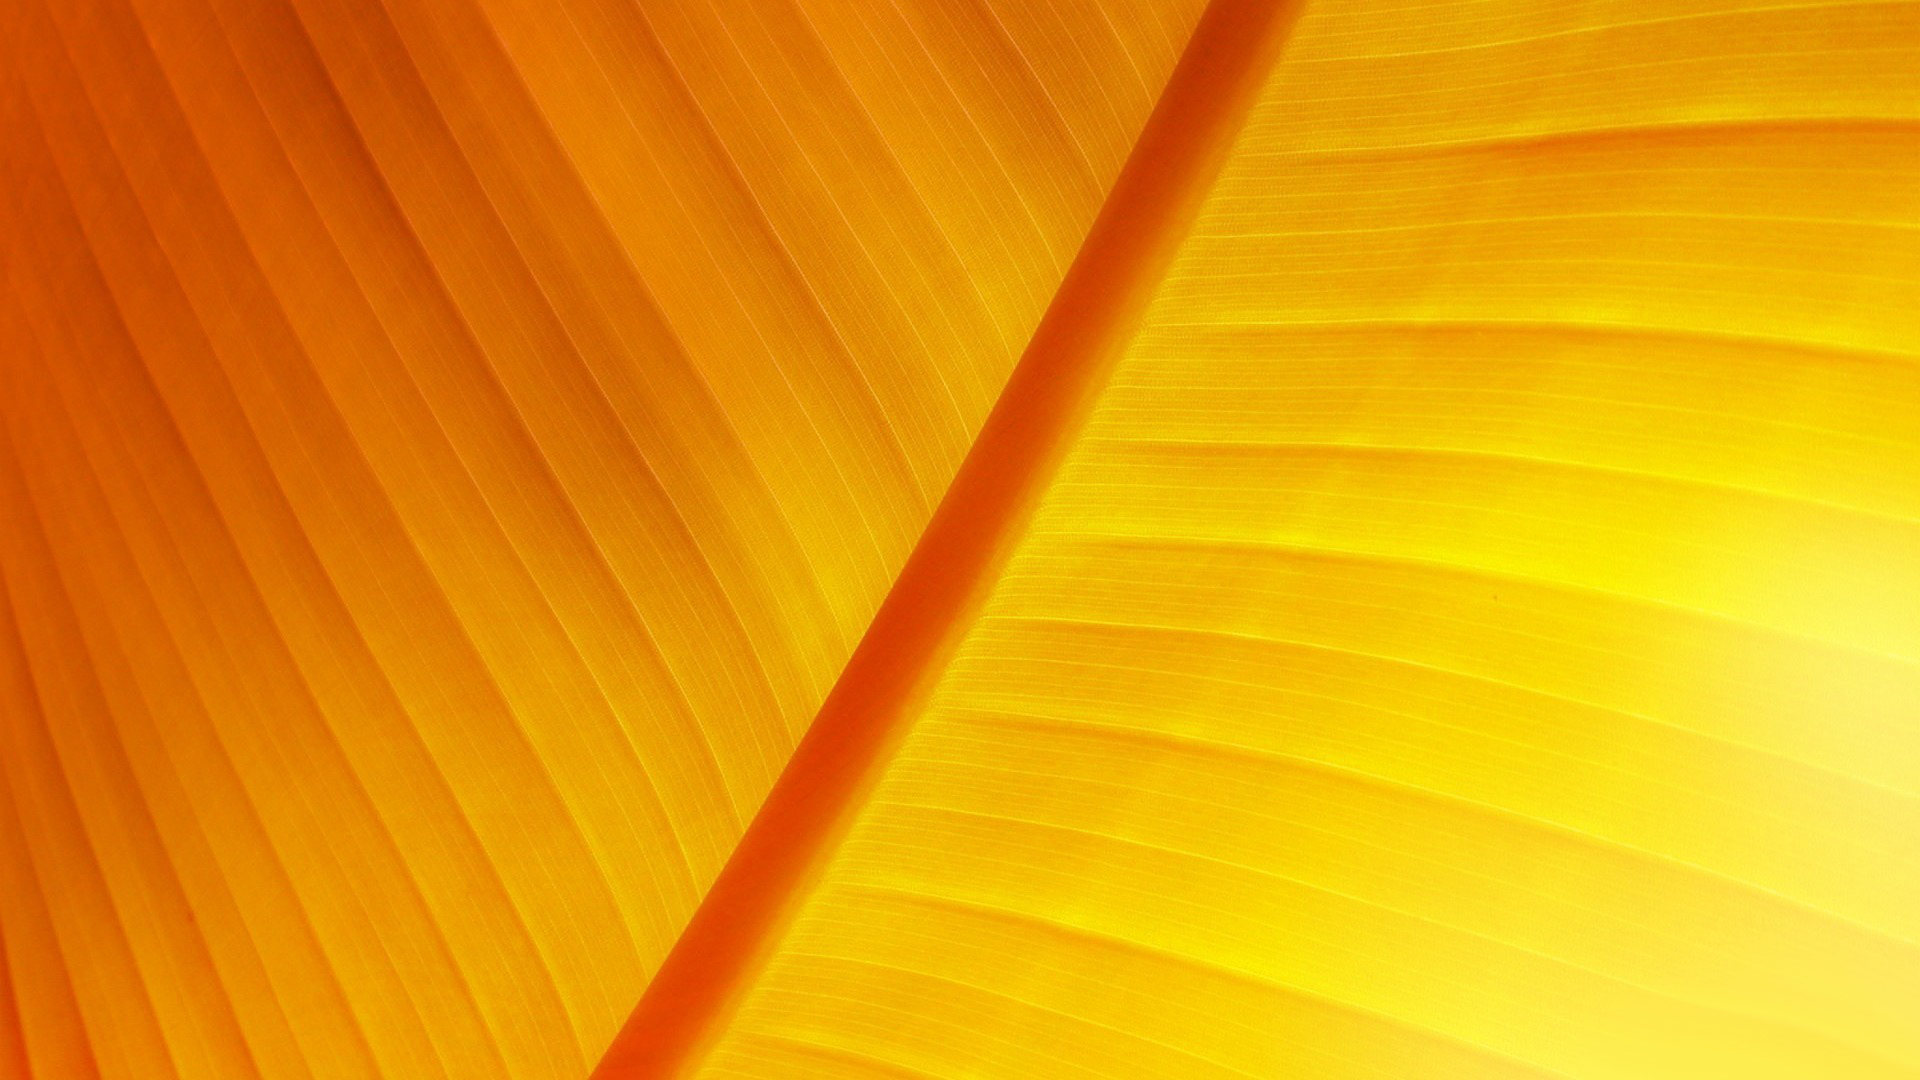 yellow autumn leaf texture background image